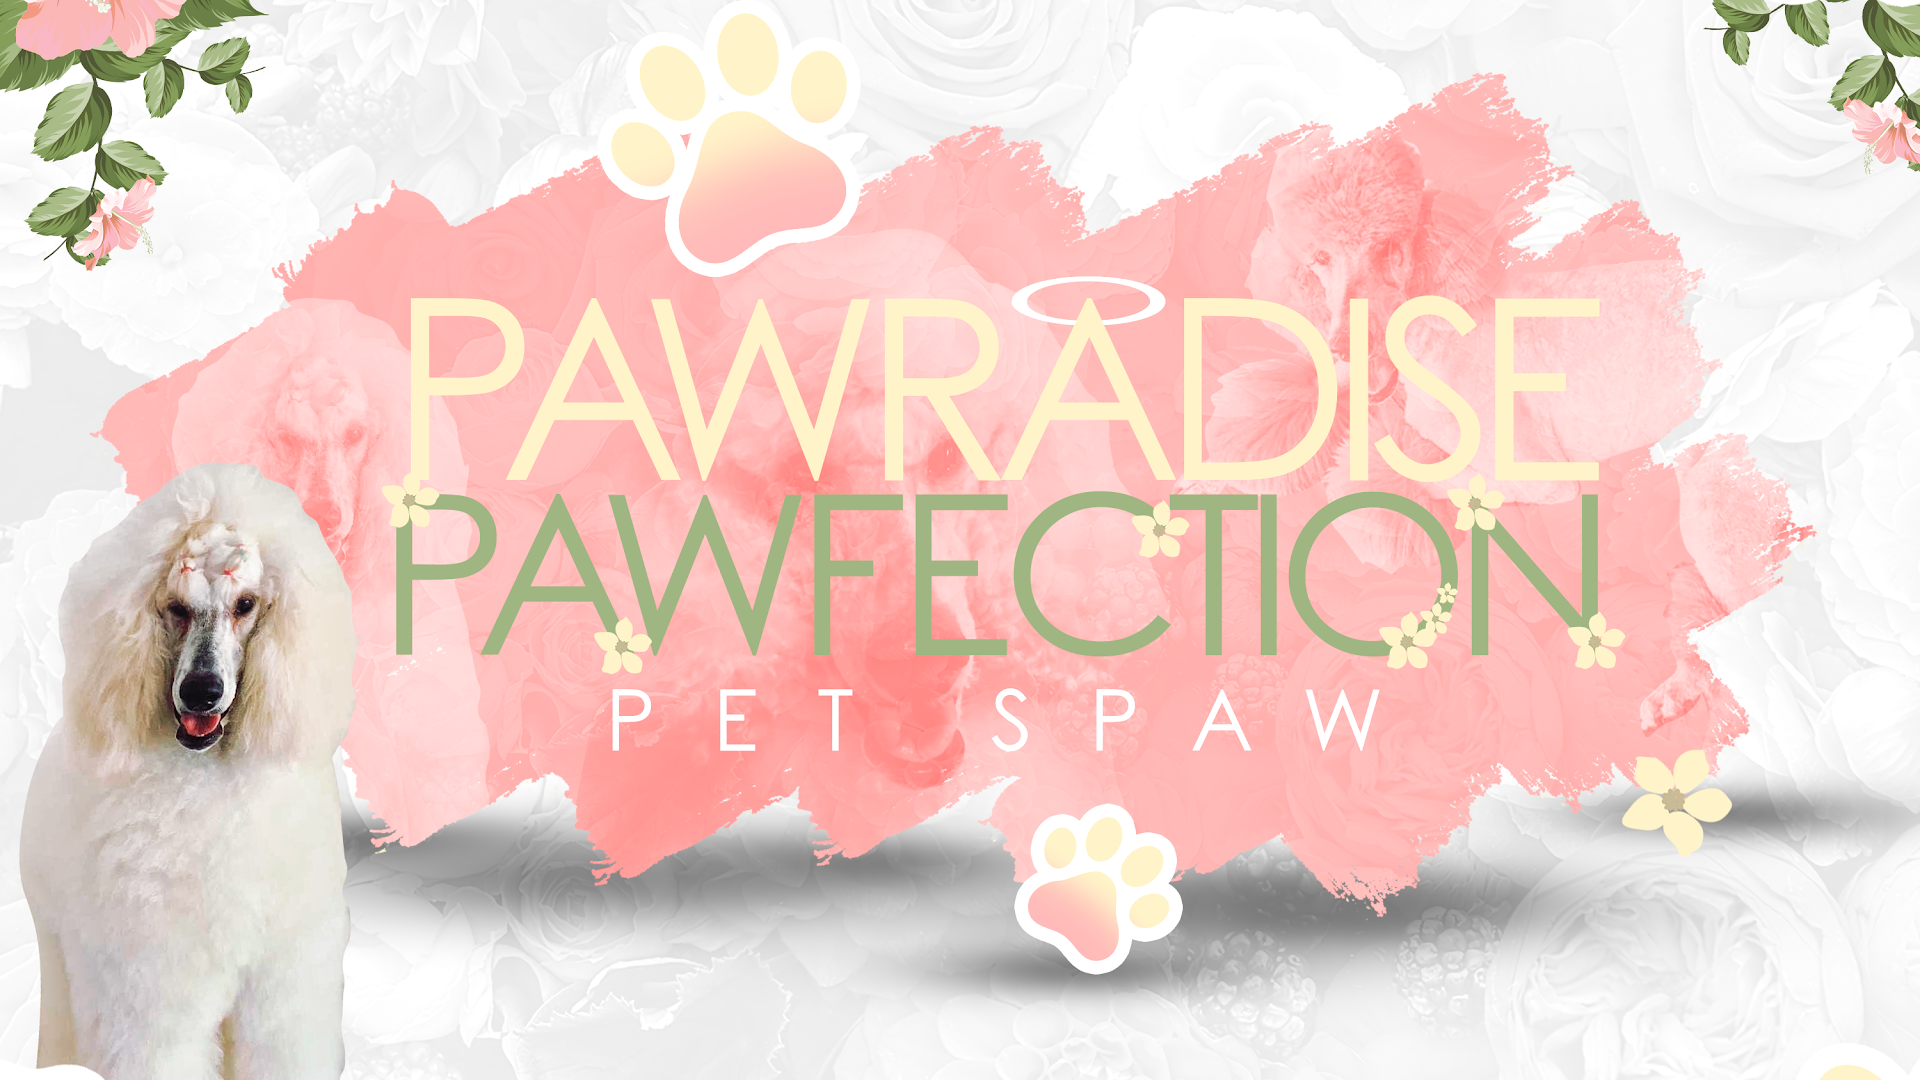 Pawradise Pawfection PetSpaw, LLC